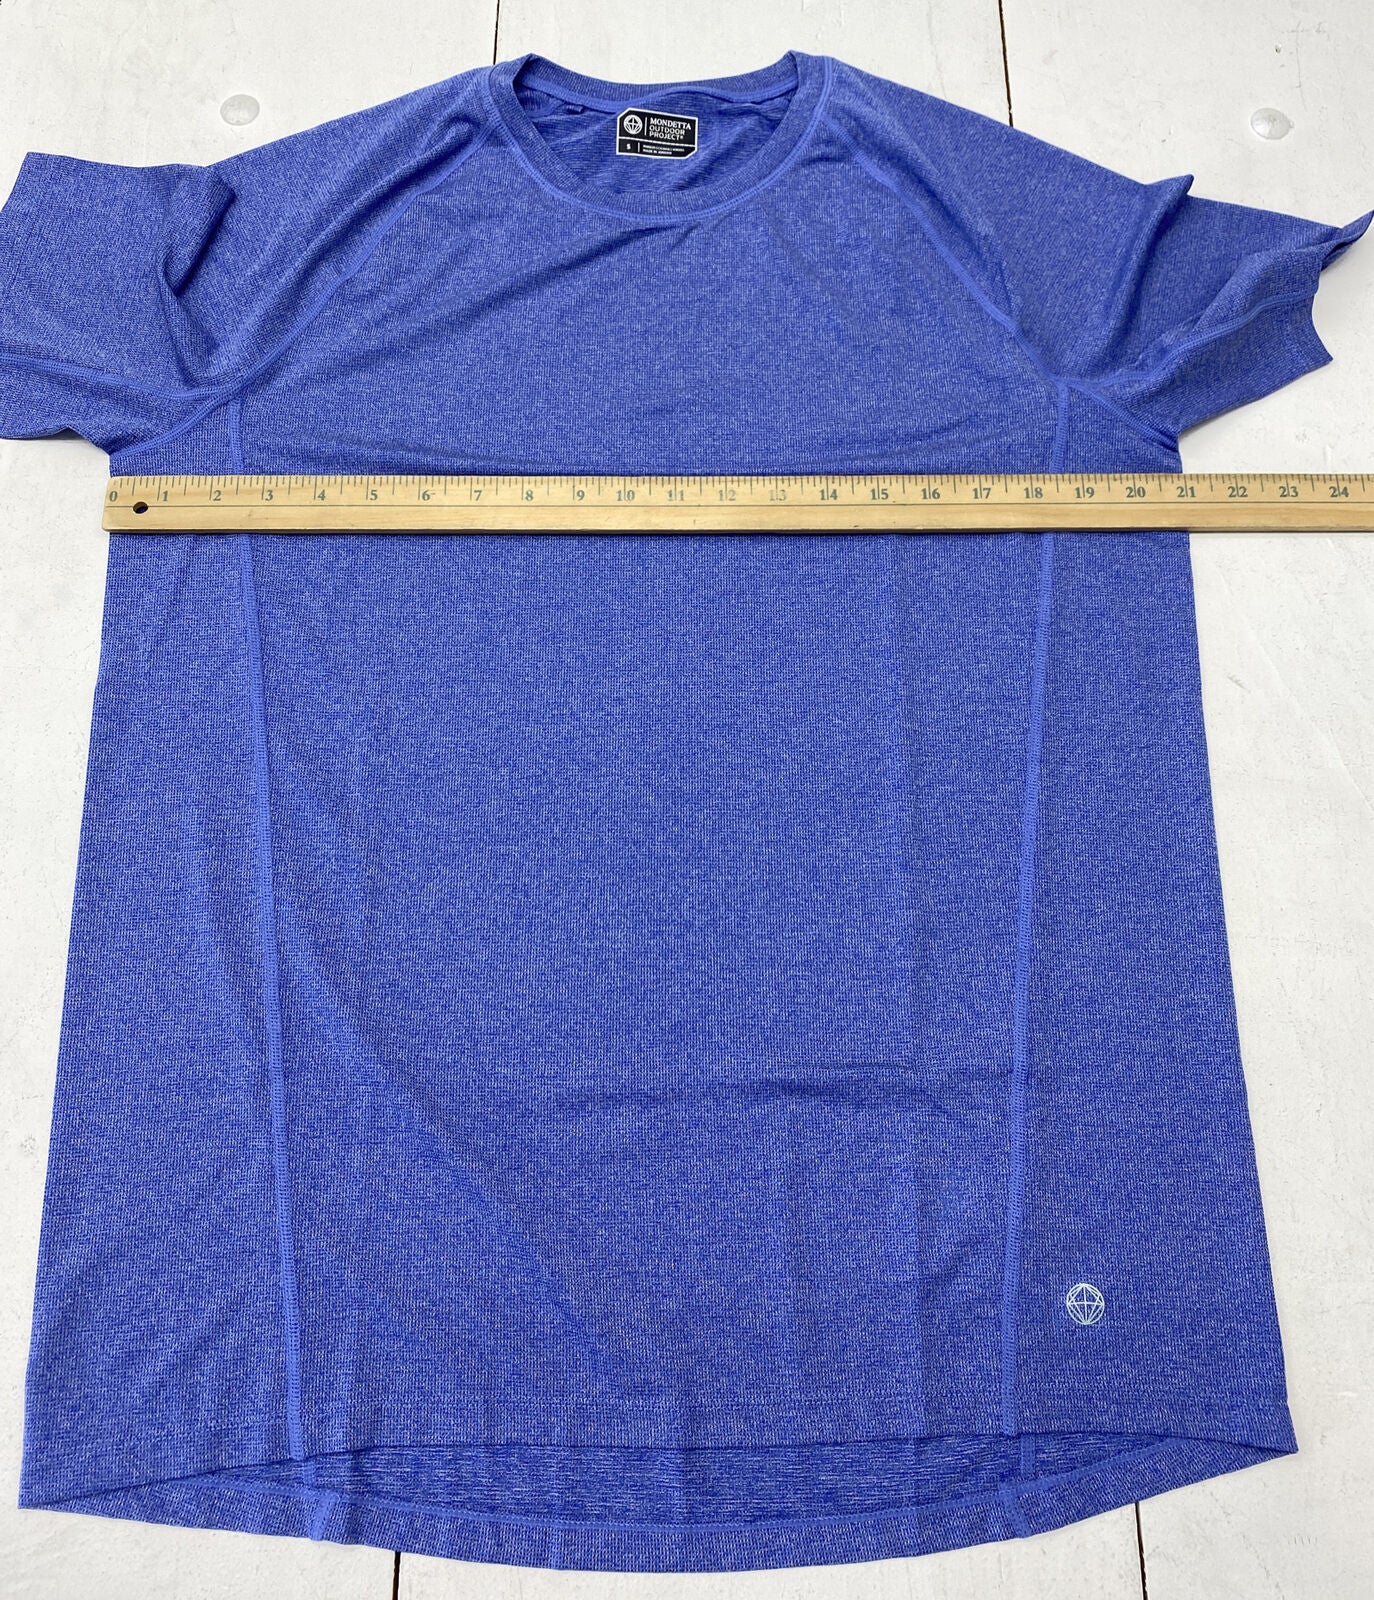 Mondetta Dress Blue/Surf Blue Performance Tee Pack of 2 Shirts Mens Si -  beyond exchange